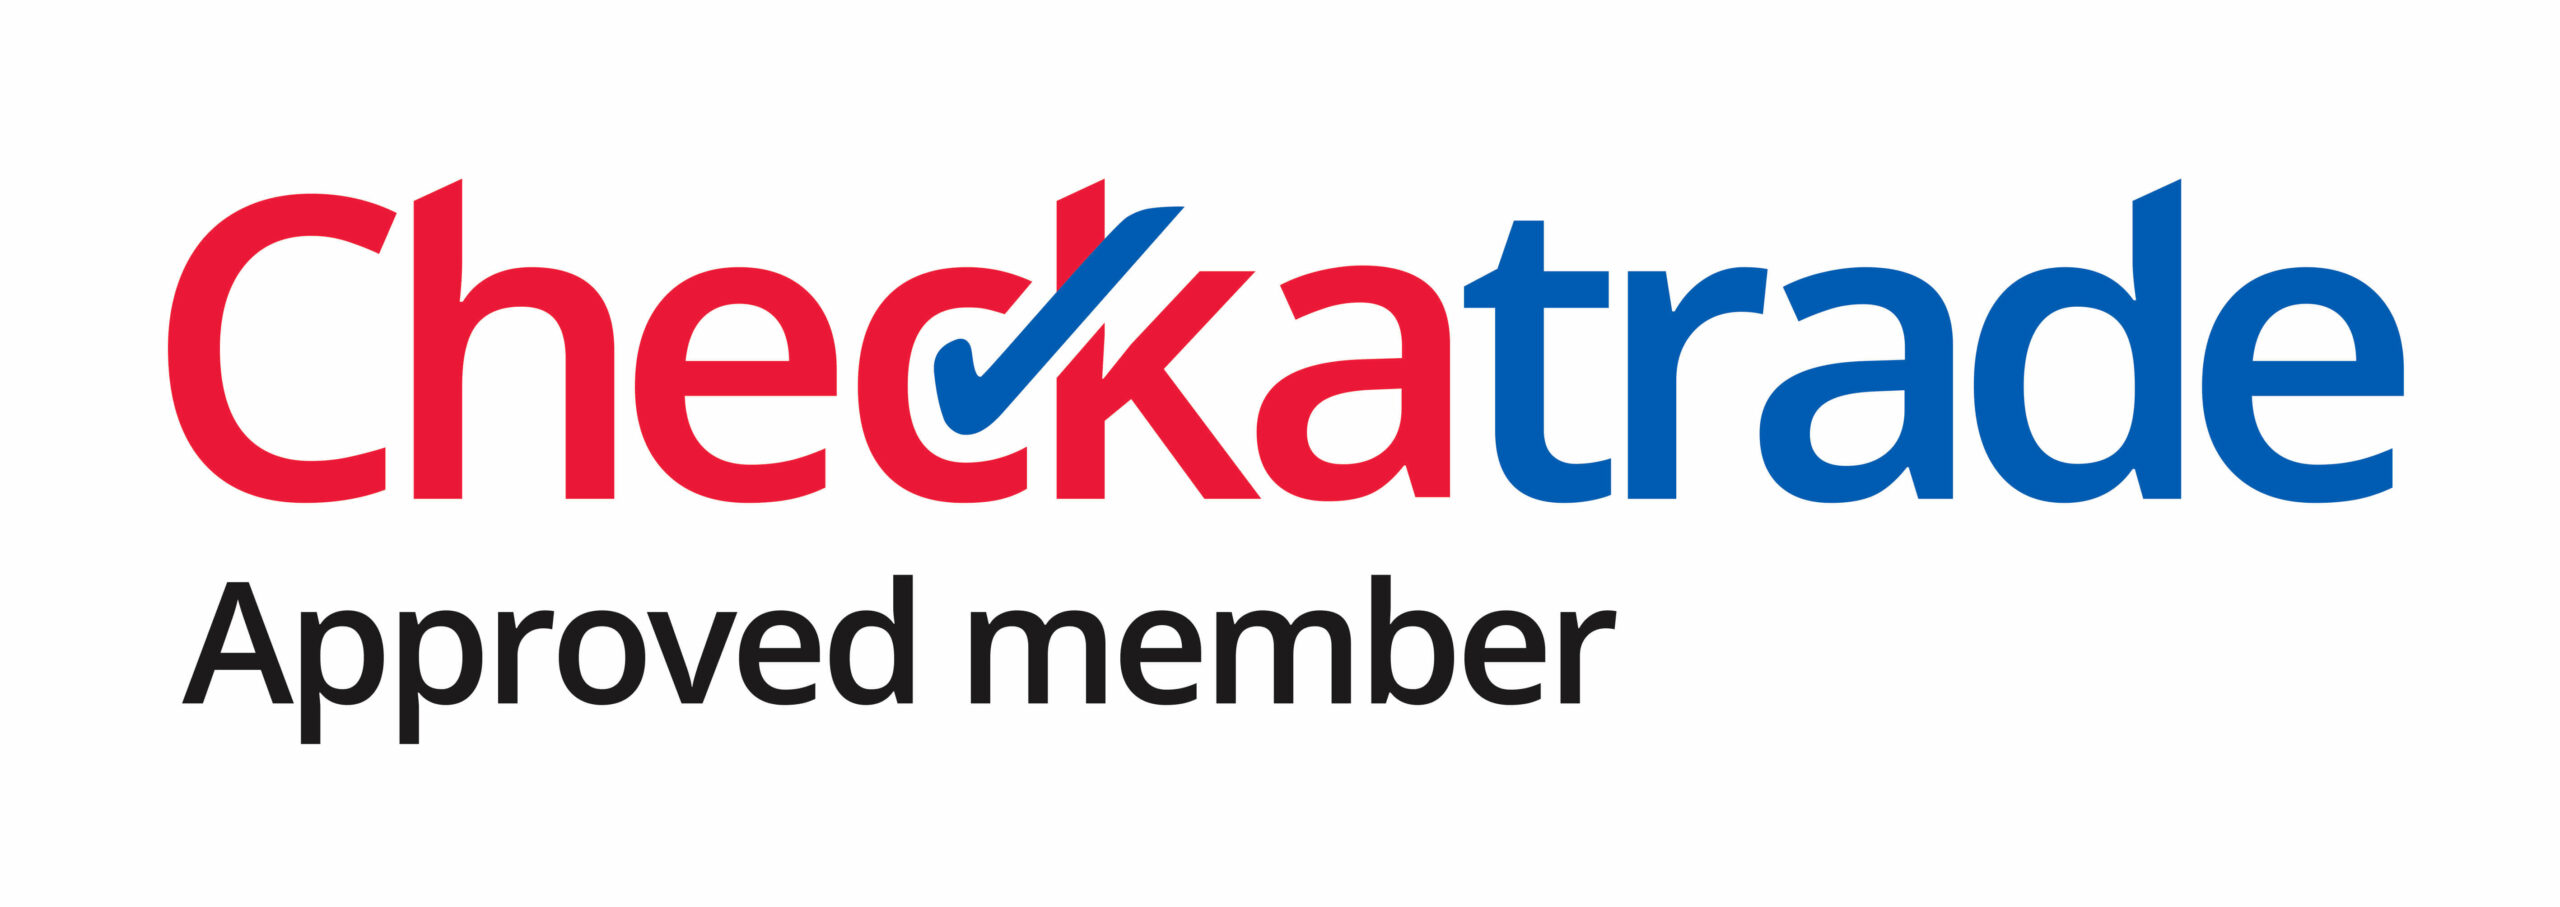 Checkatrade approved member logo